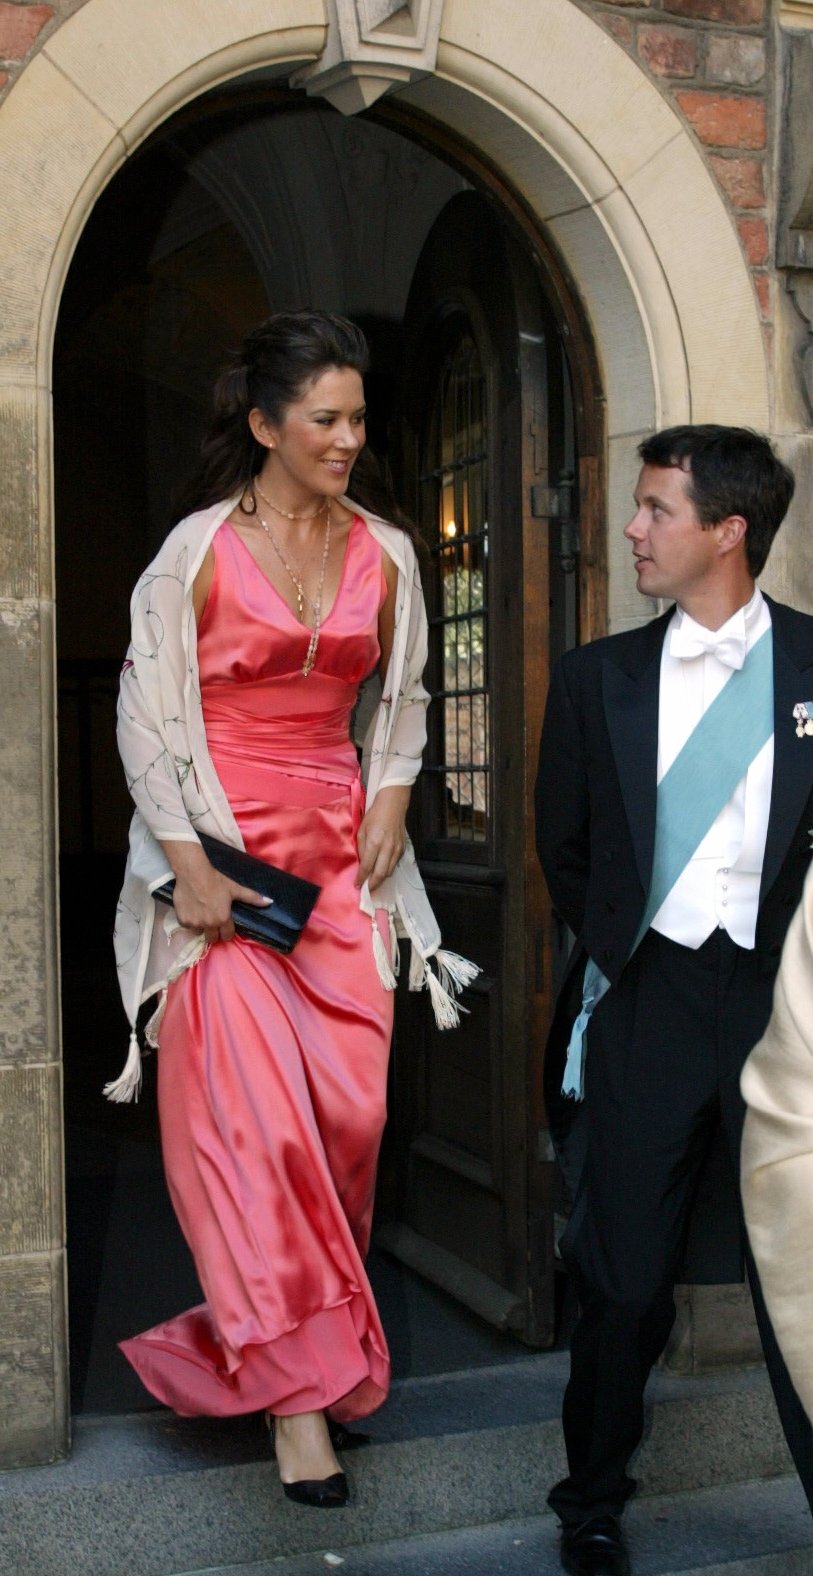 2002-08-24++wedding+of+baron+Otto+Reedtz-Thott+and+Helle+Zofting+at+Frederiksborg+castle.jpg